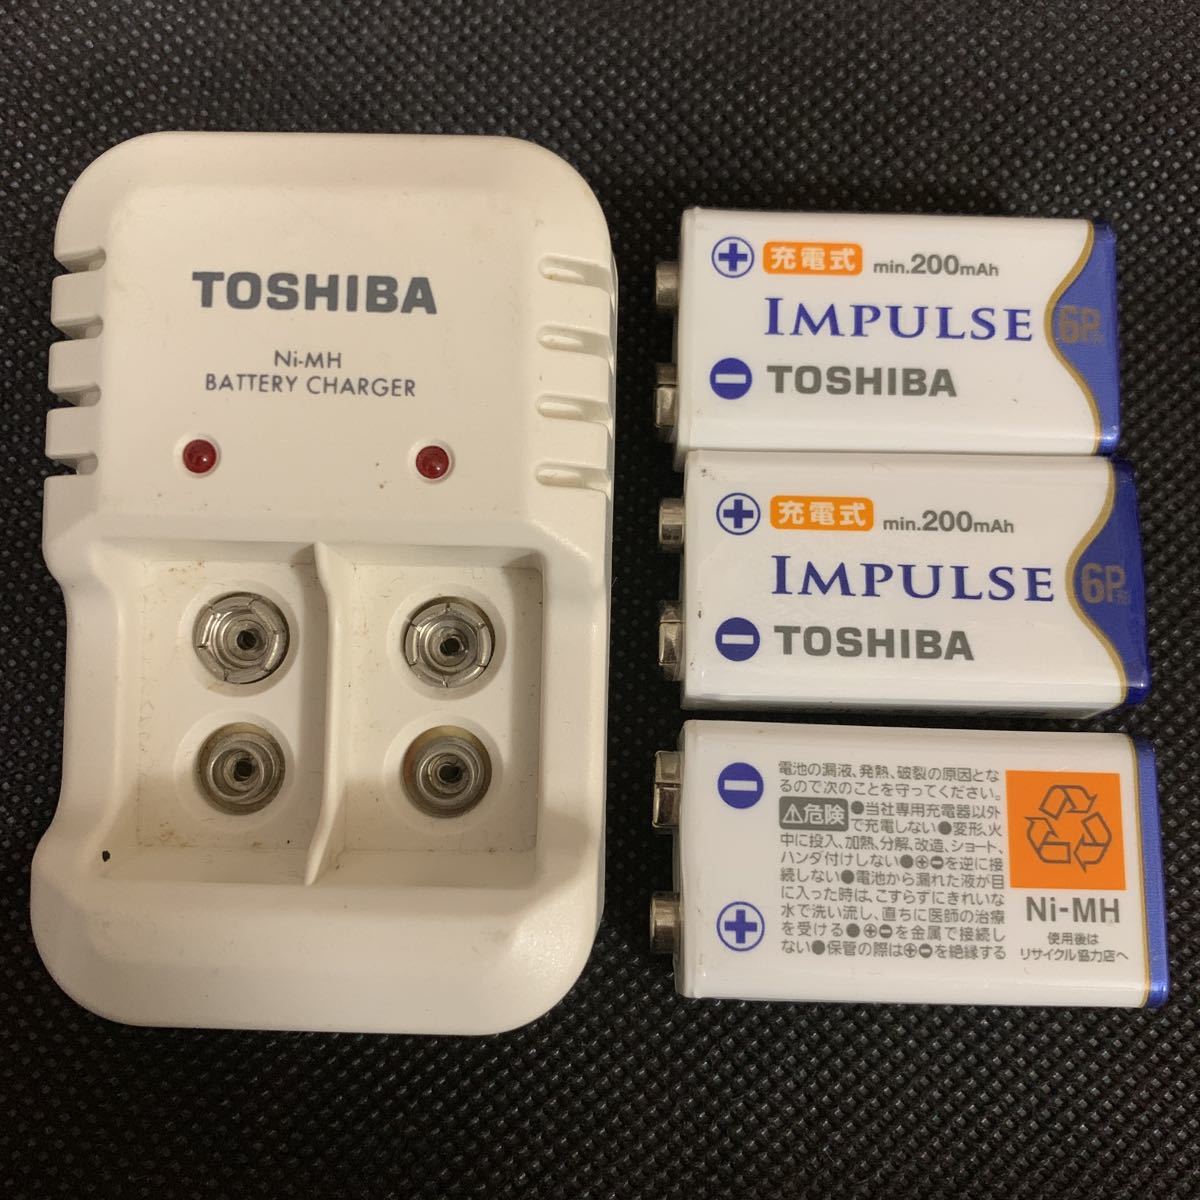 TOSHIBA 6P形専用充電器 IMPULSE TNHC-622SC & TOSHIBA ニッケル水素電池 充電式IMPULSE 単6P形充電池(min.200mAh) 3本セット 6TNH22A _画像1